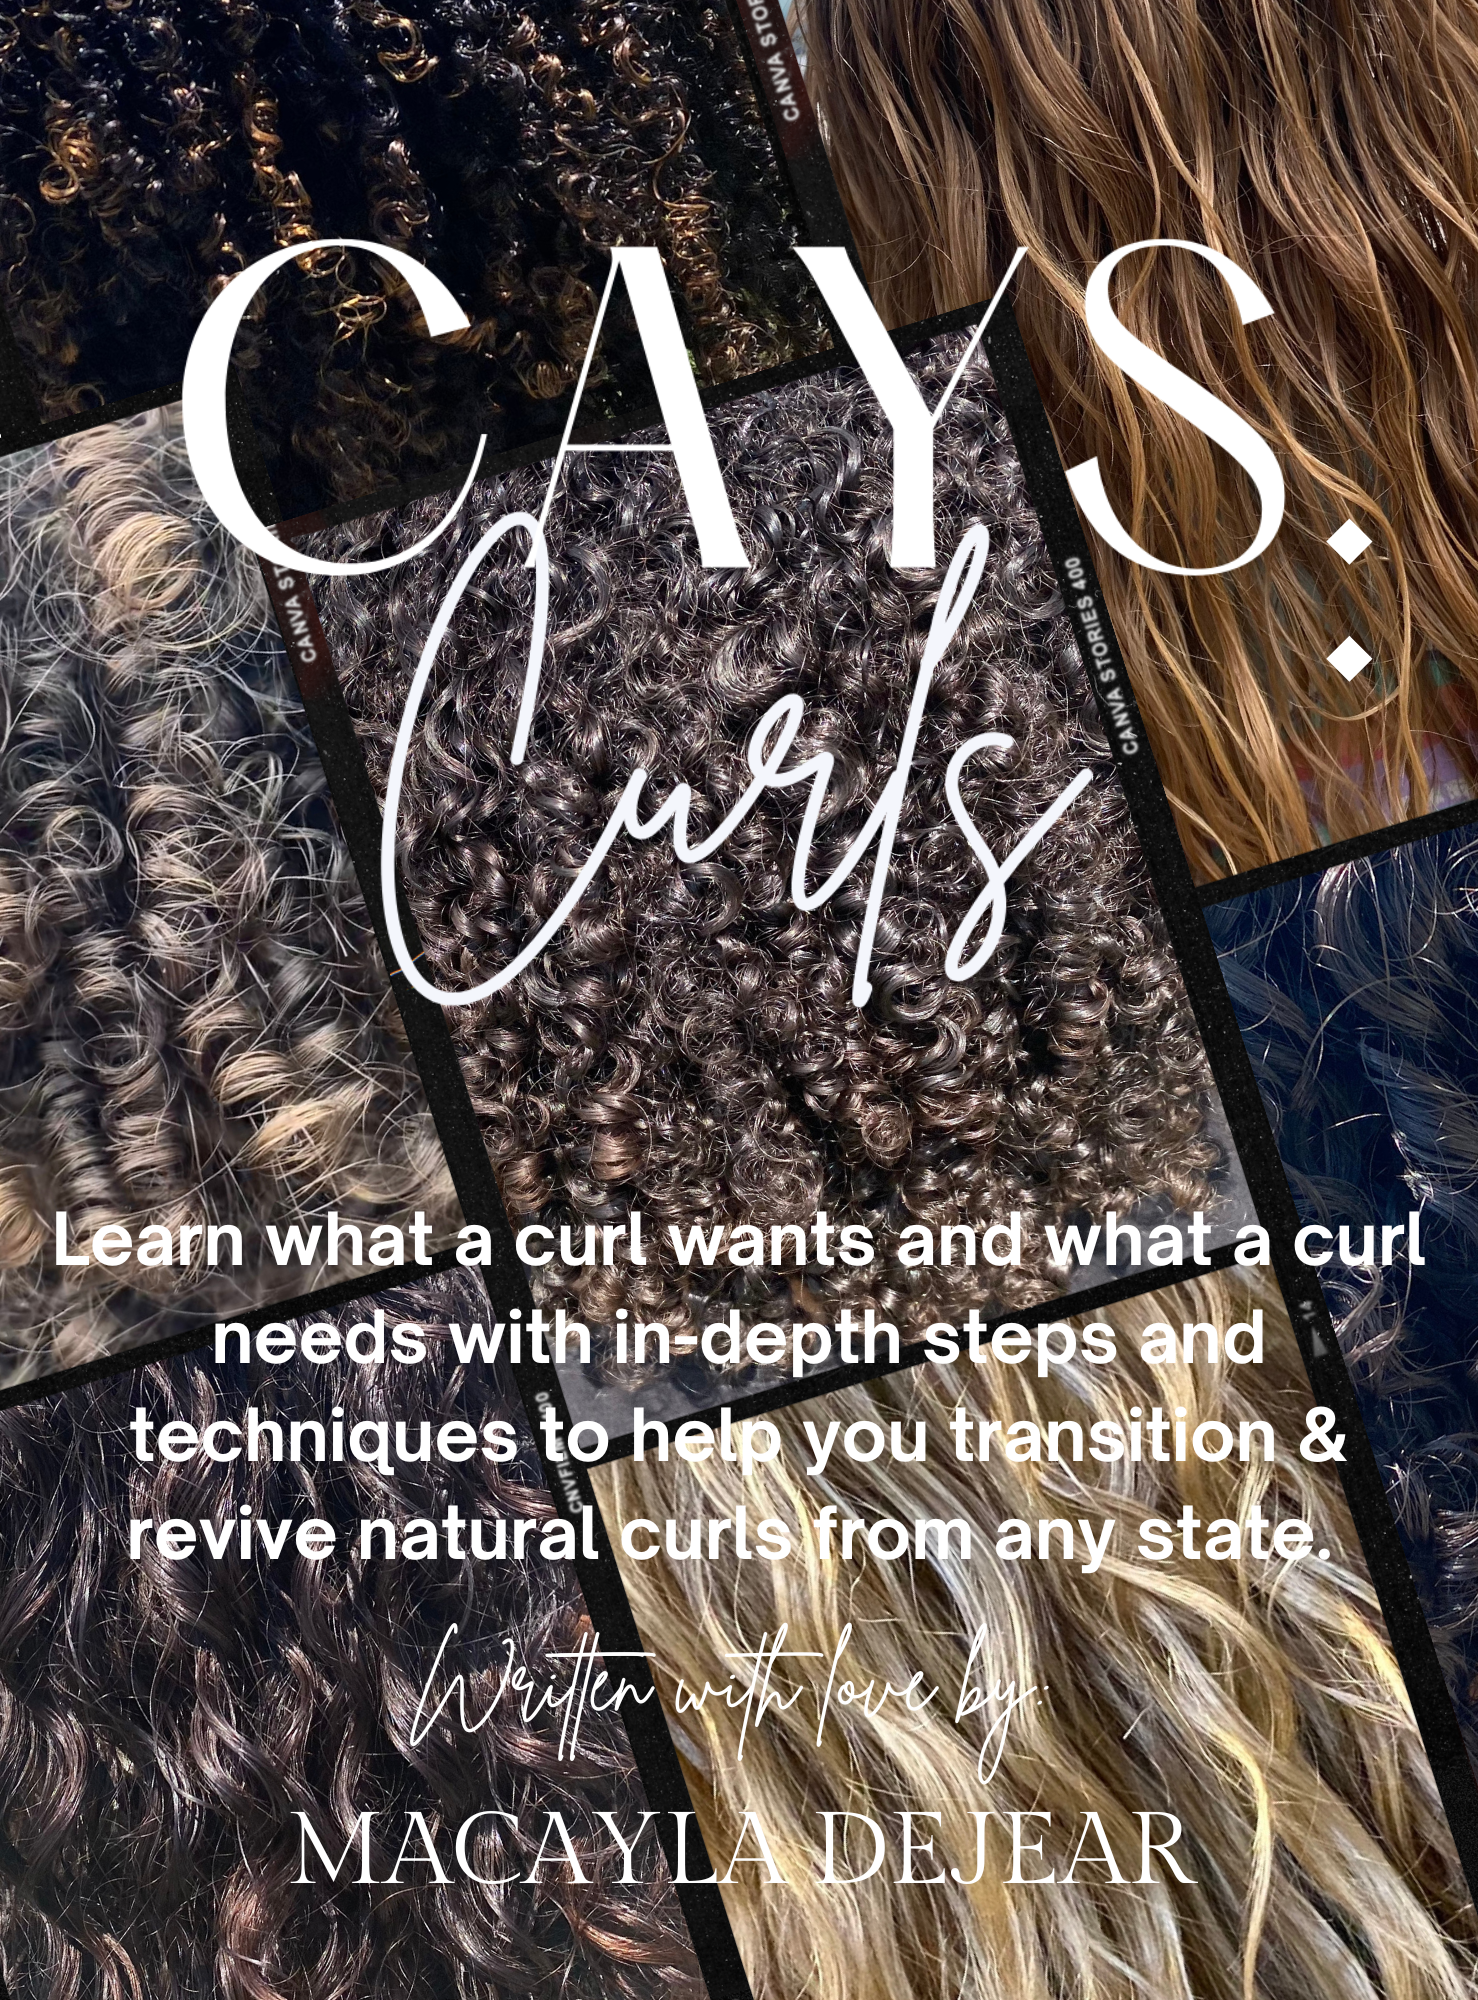 Cays Curls: The E-Book - Cays Curls